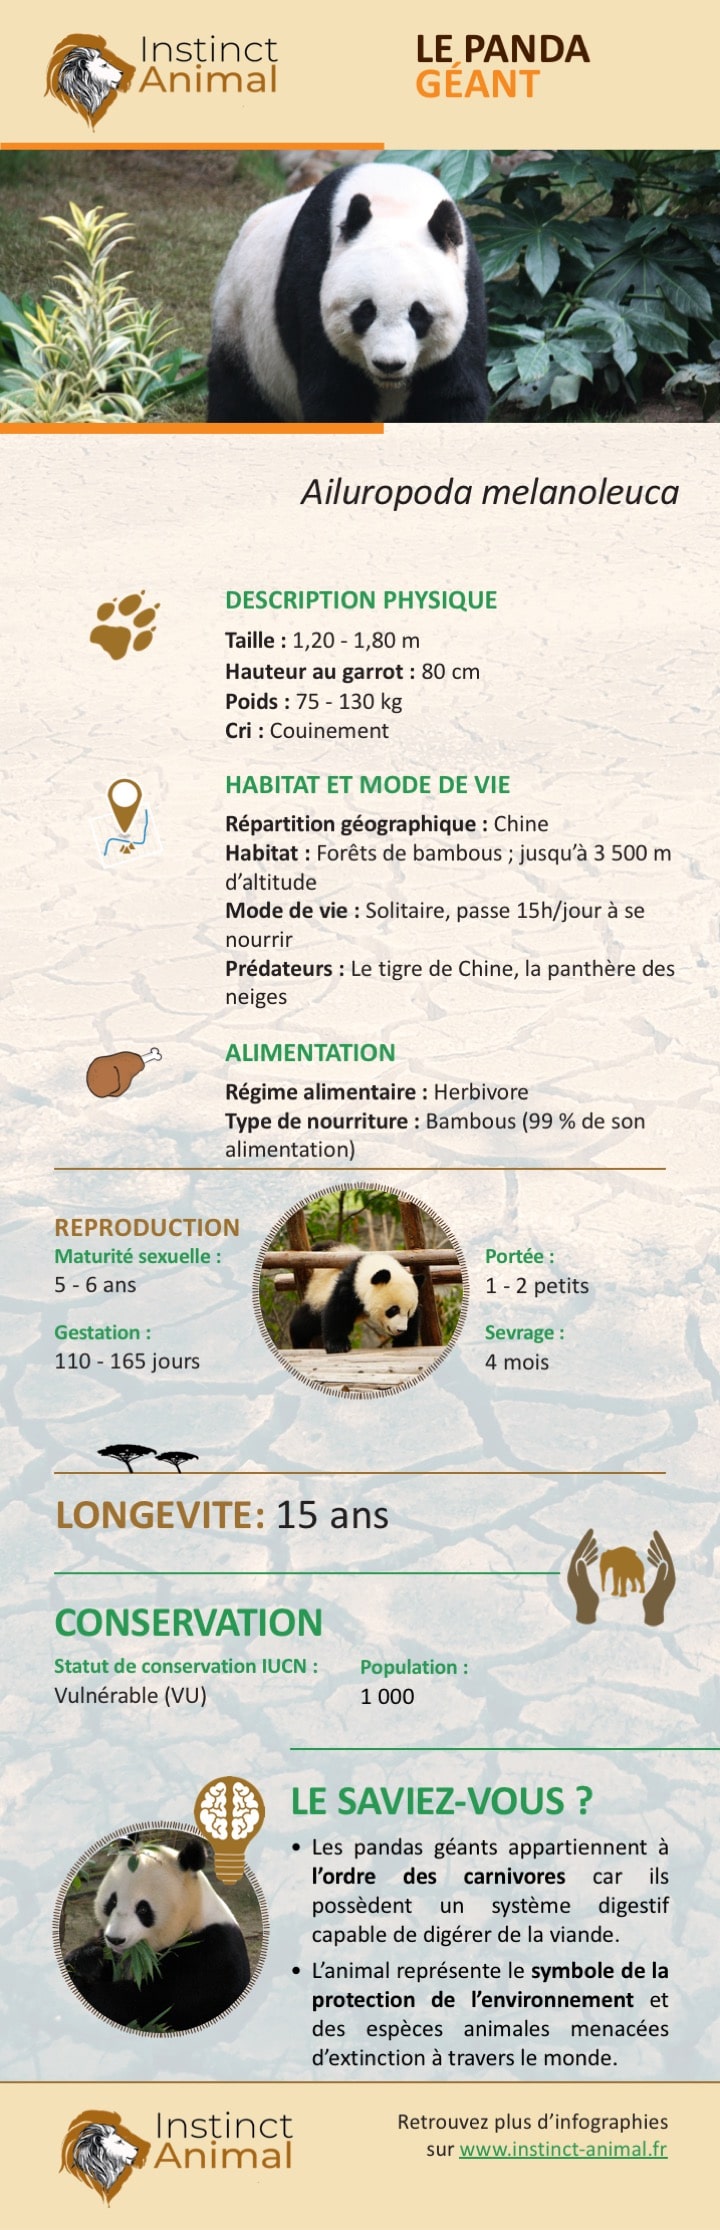 https://www.instinct-animal.fr/panda-geant-infographie-2/